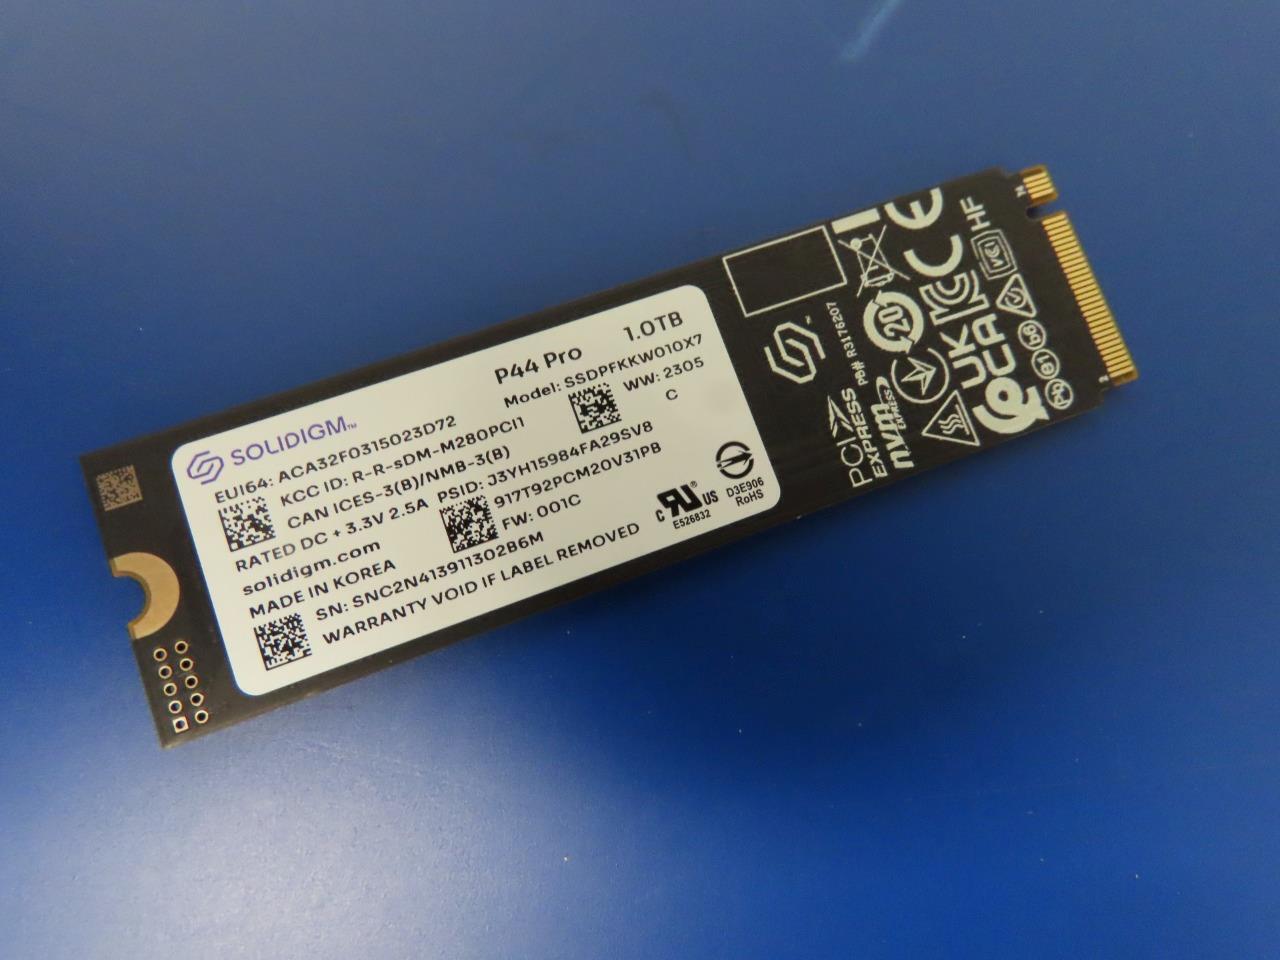 Solidigm P44 Pro 1TB M.2 2280 PCIe 4.0 - SSDPFKKW010X7 Internal SSD